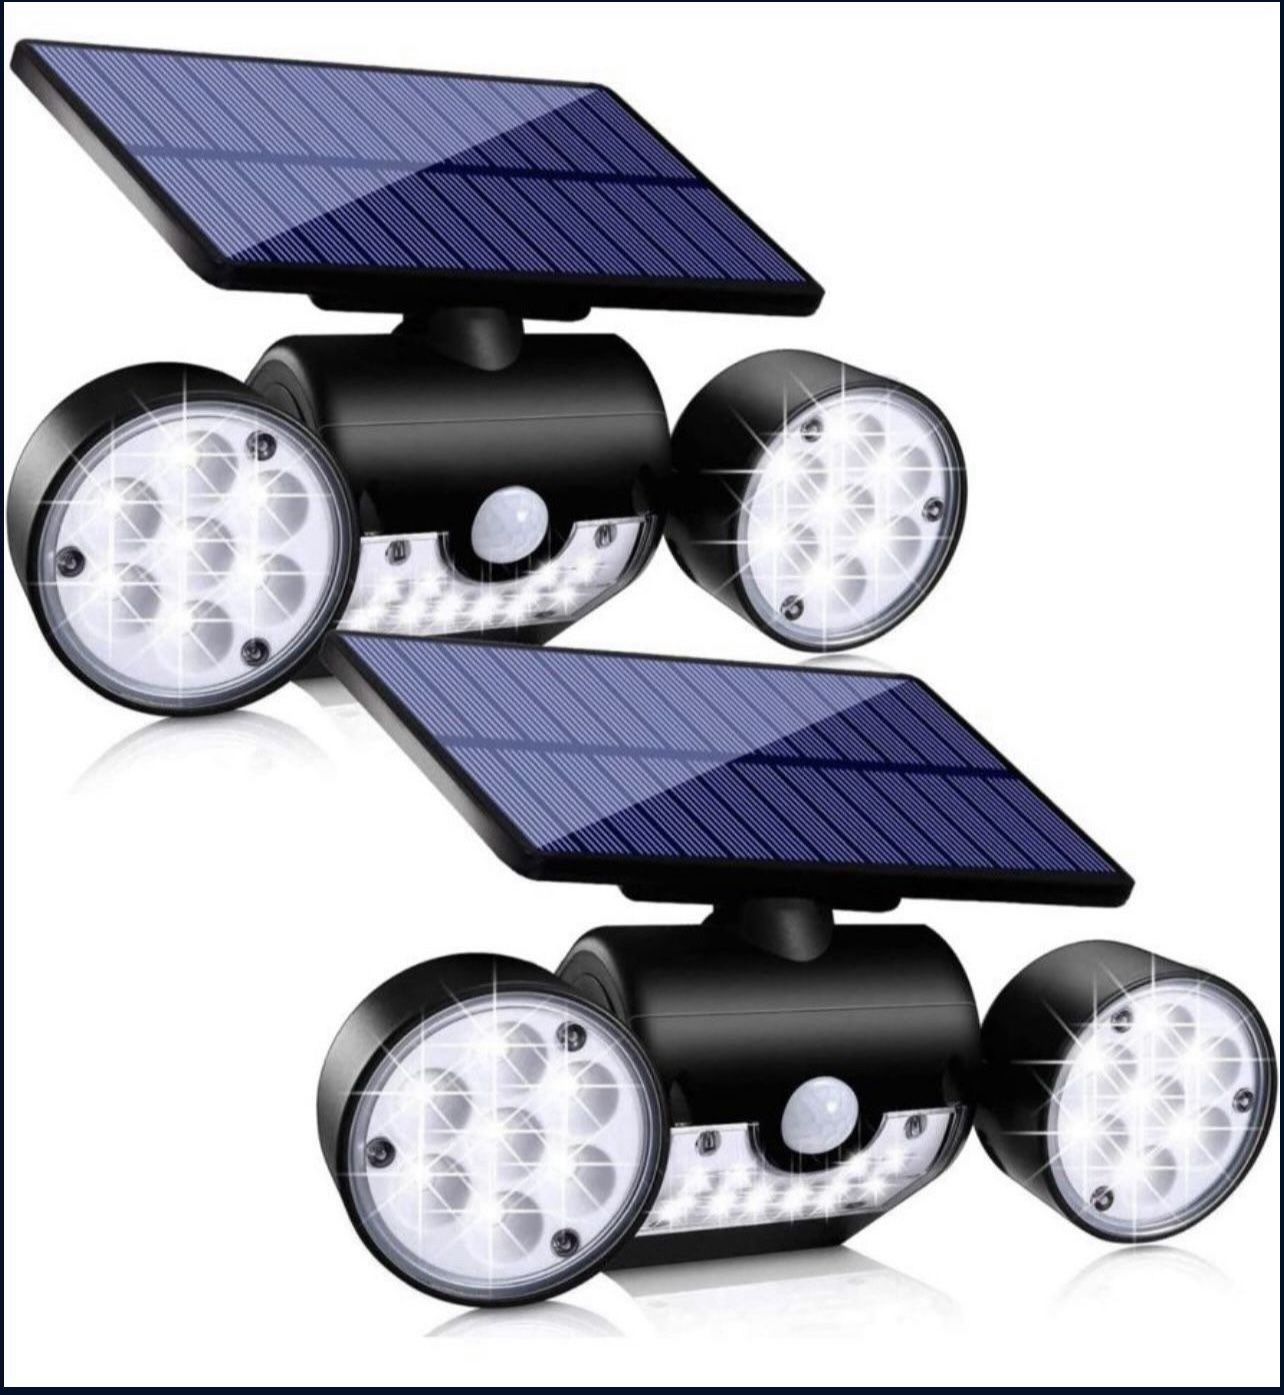 Outdoor Solar Lights, Ollivage 30 LED Solar Security Lights with Motion Sensor Dual Head Spotlights IP65 Waterproof 360° Adjustable LED Solar Motion L